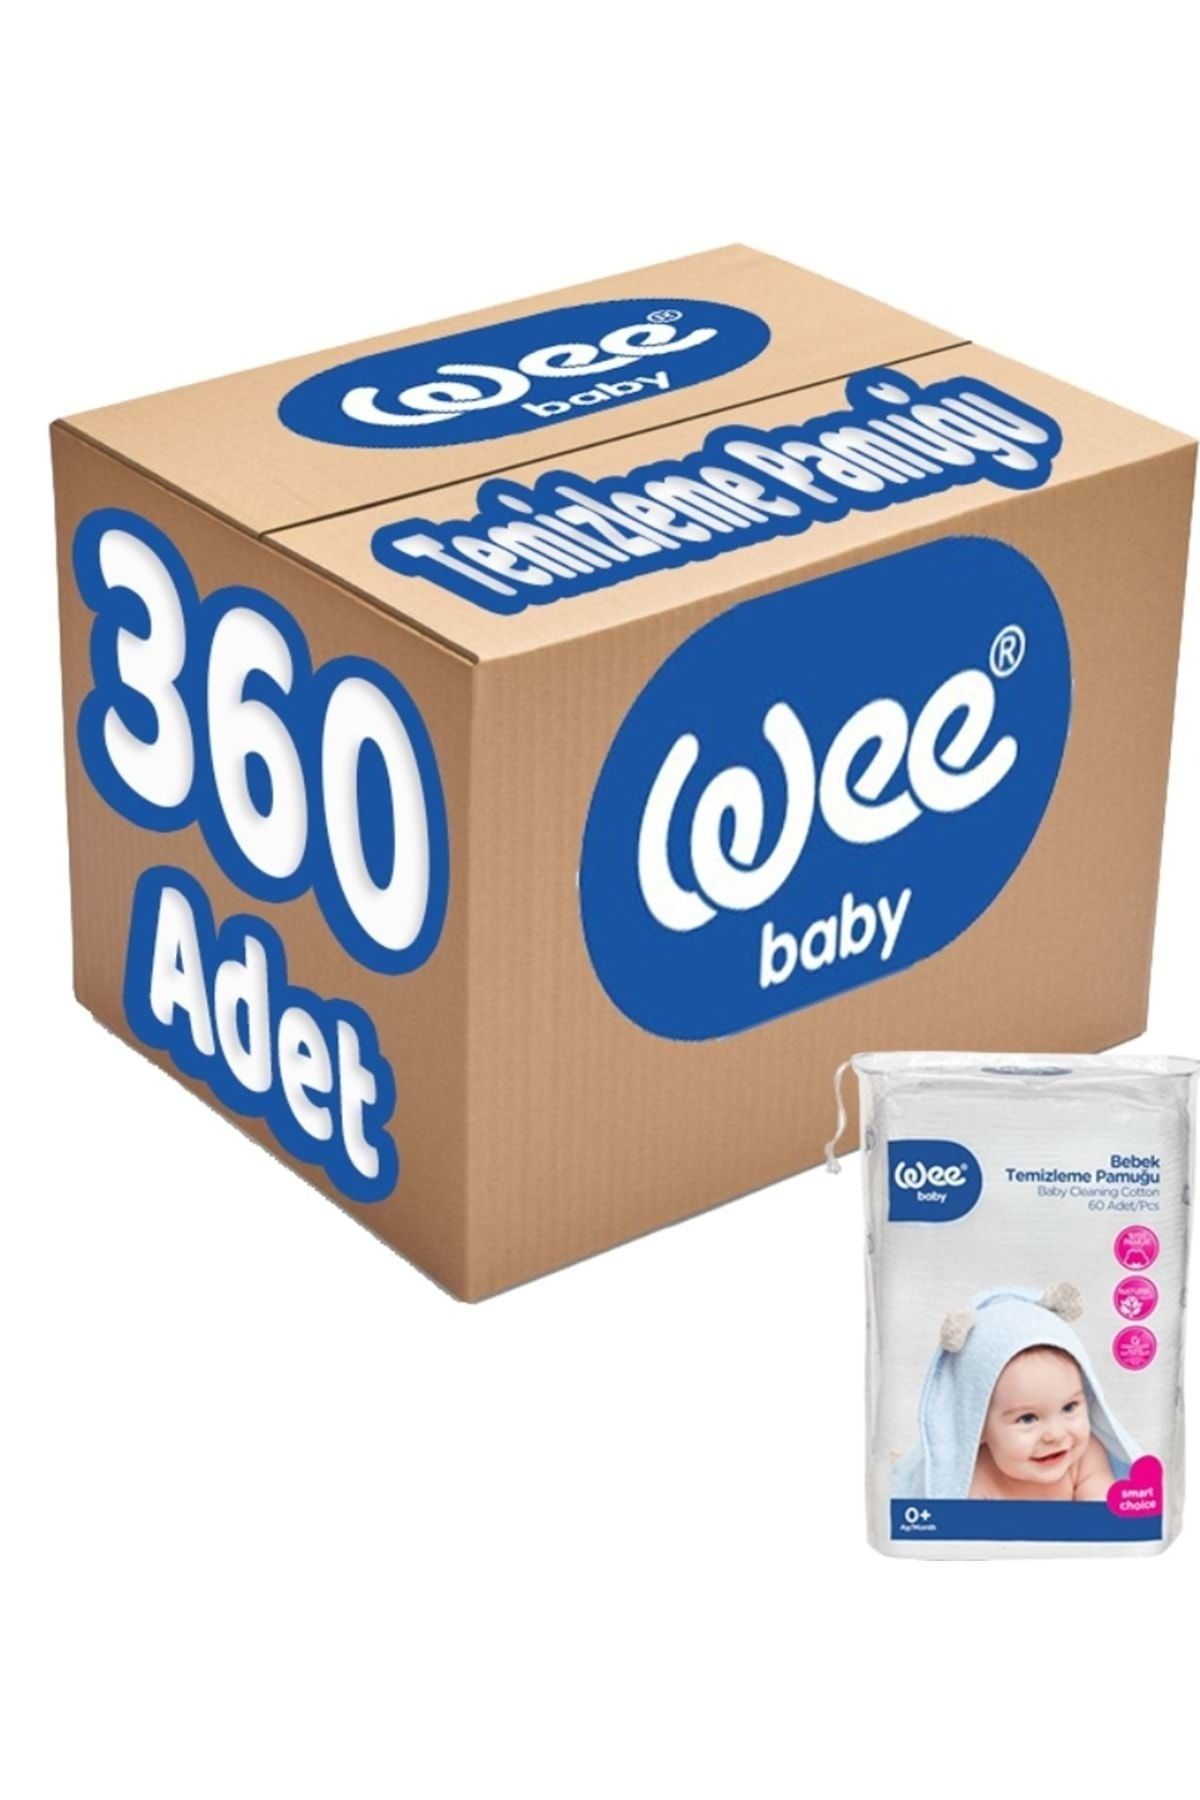 Wee Baby Bebek Temizleme Pamuğu 360 Adet 6pkx60